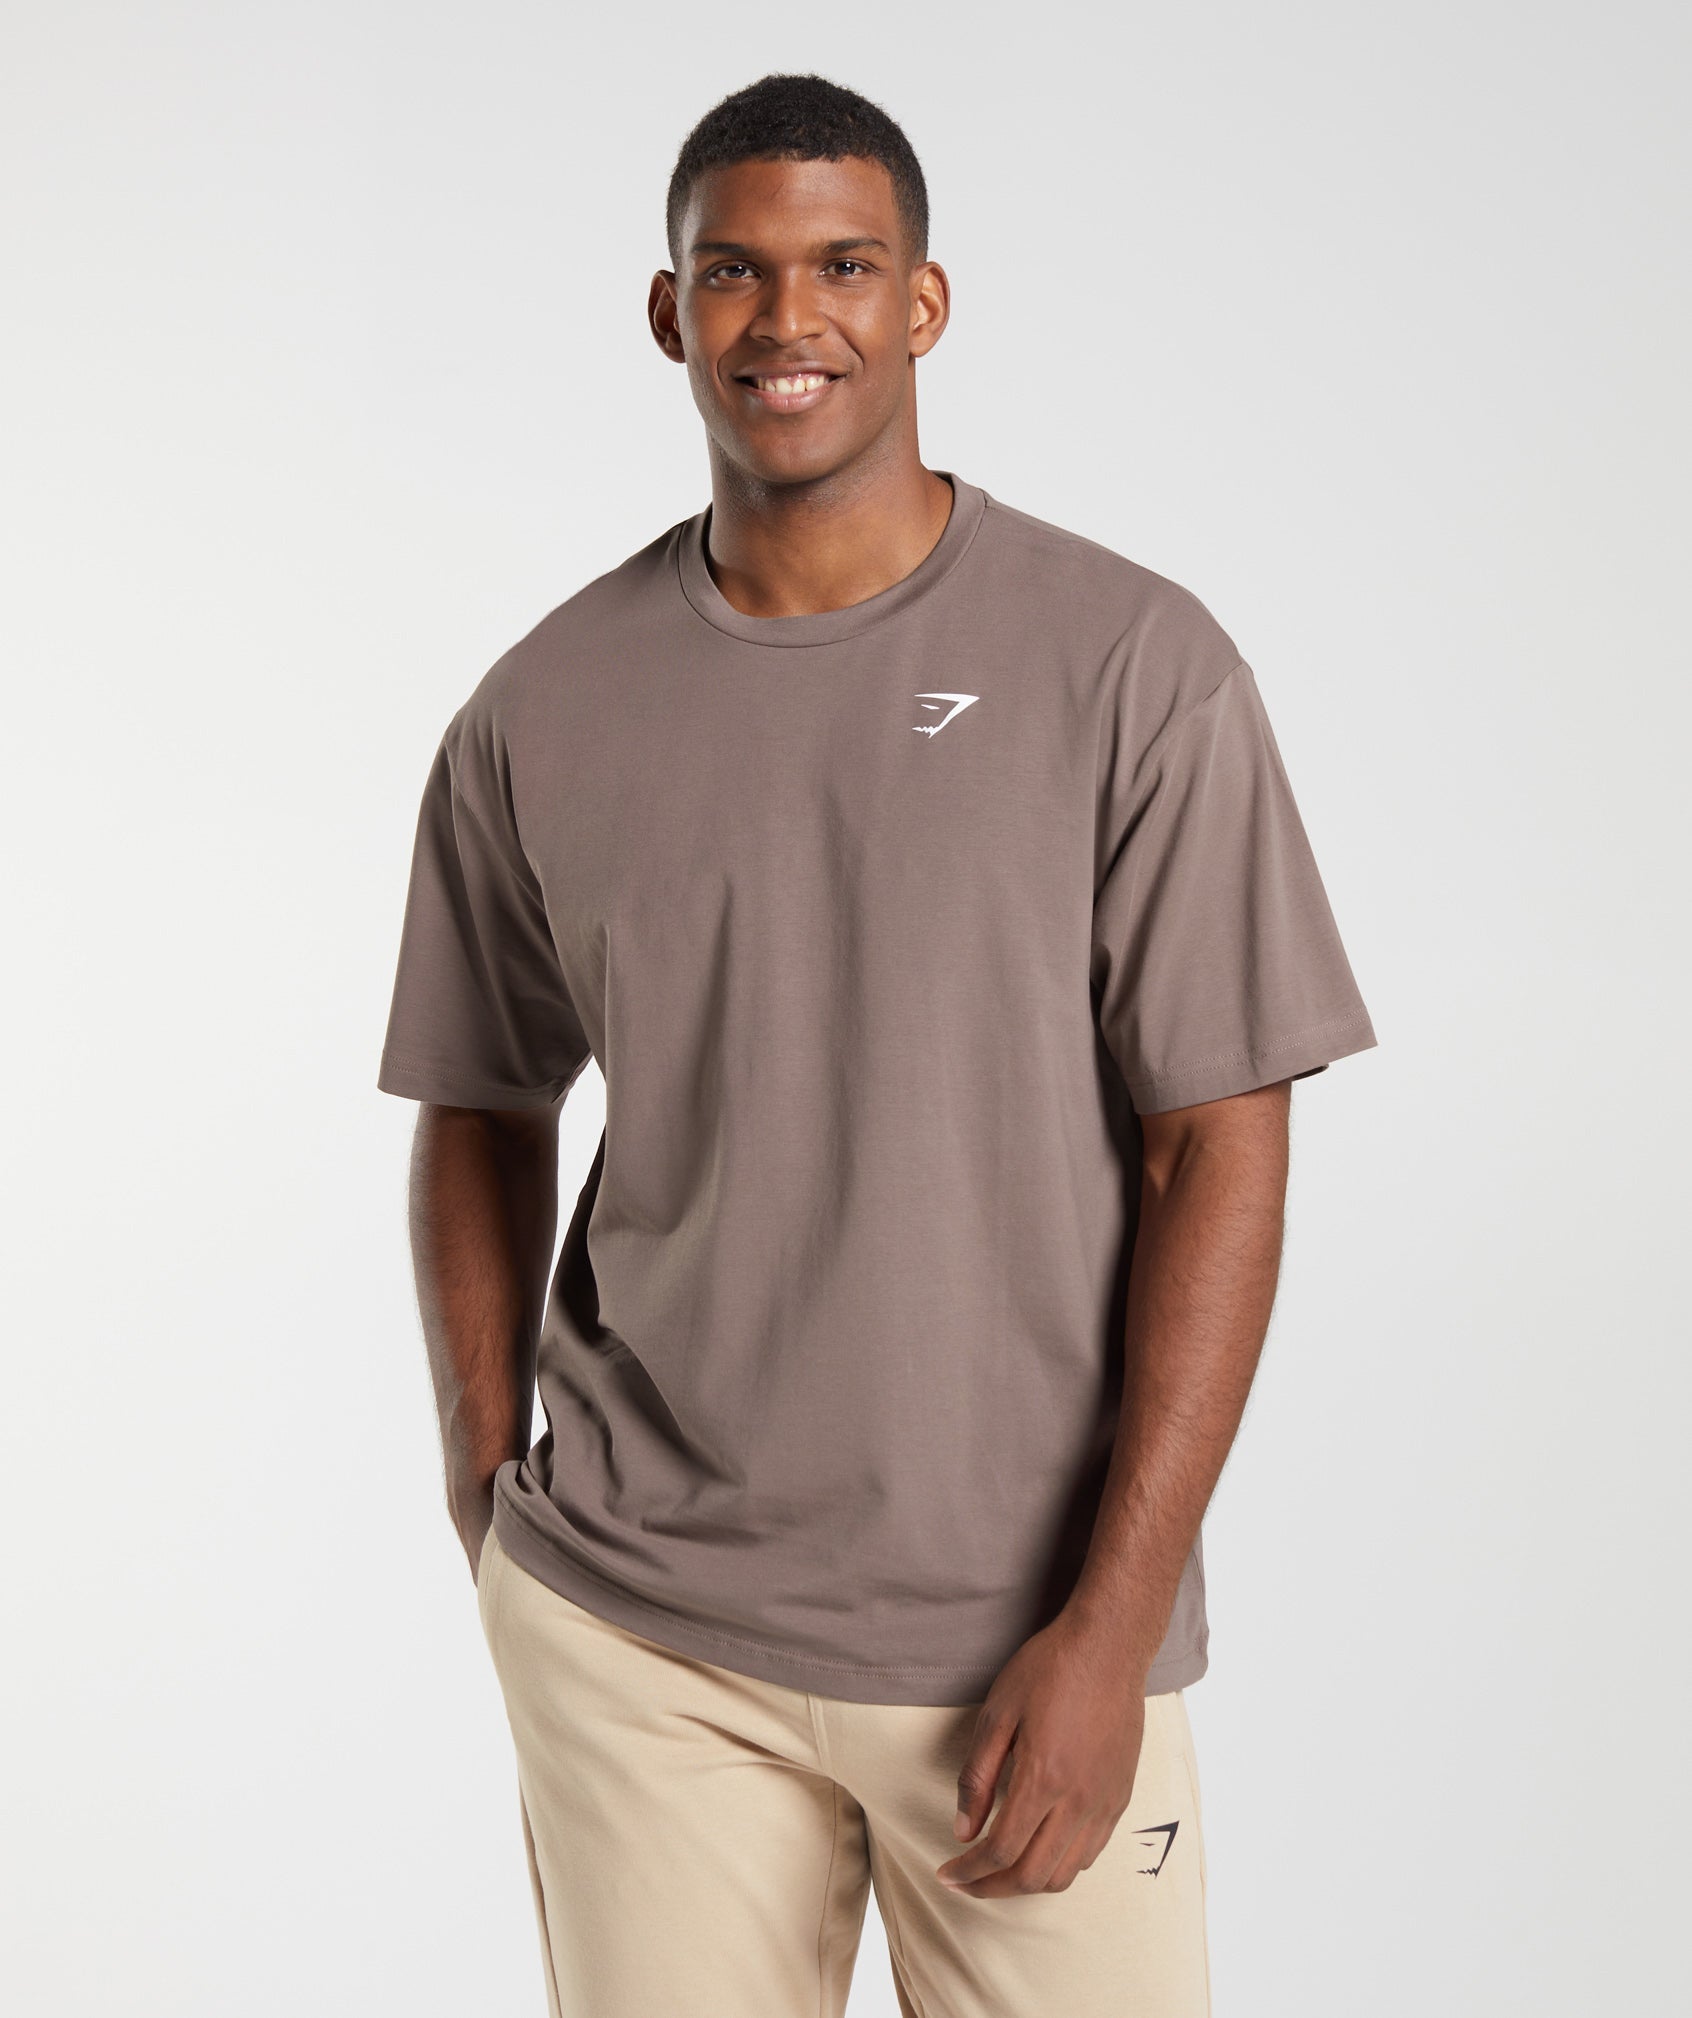 Gymshark Essential T-Shirt - Charcoal Grey Marl